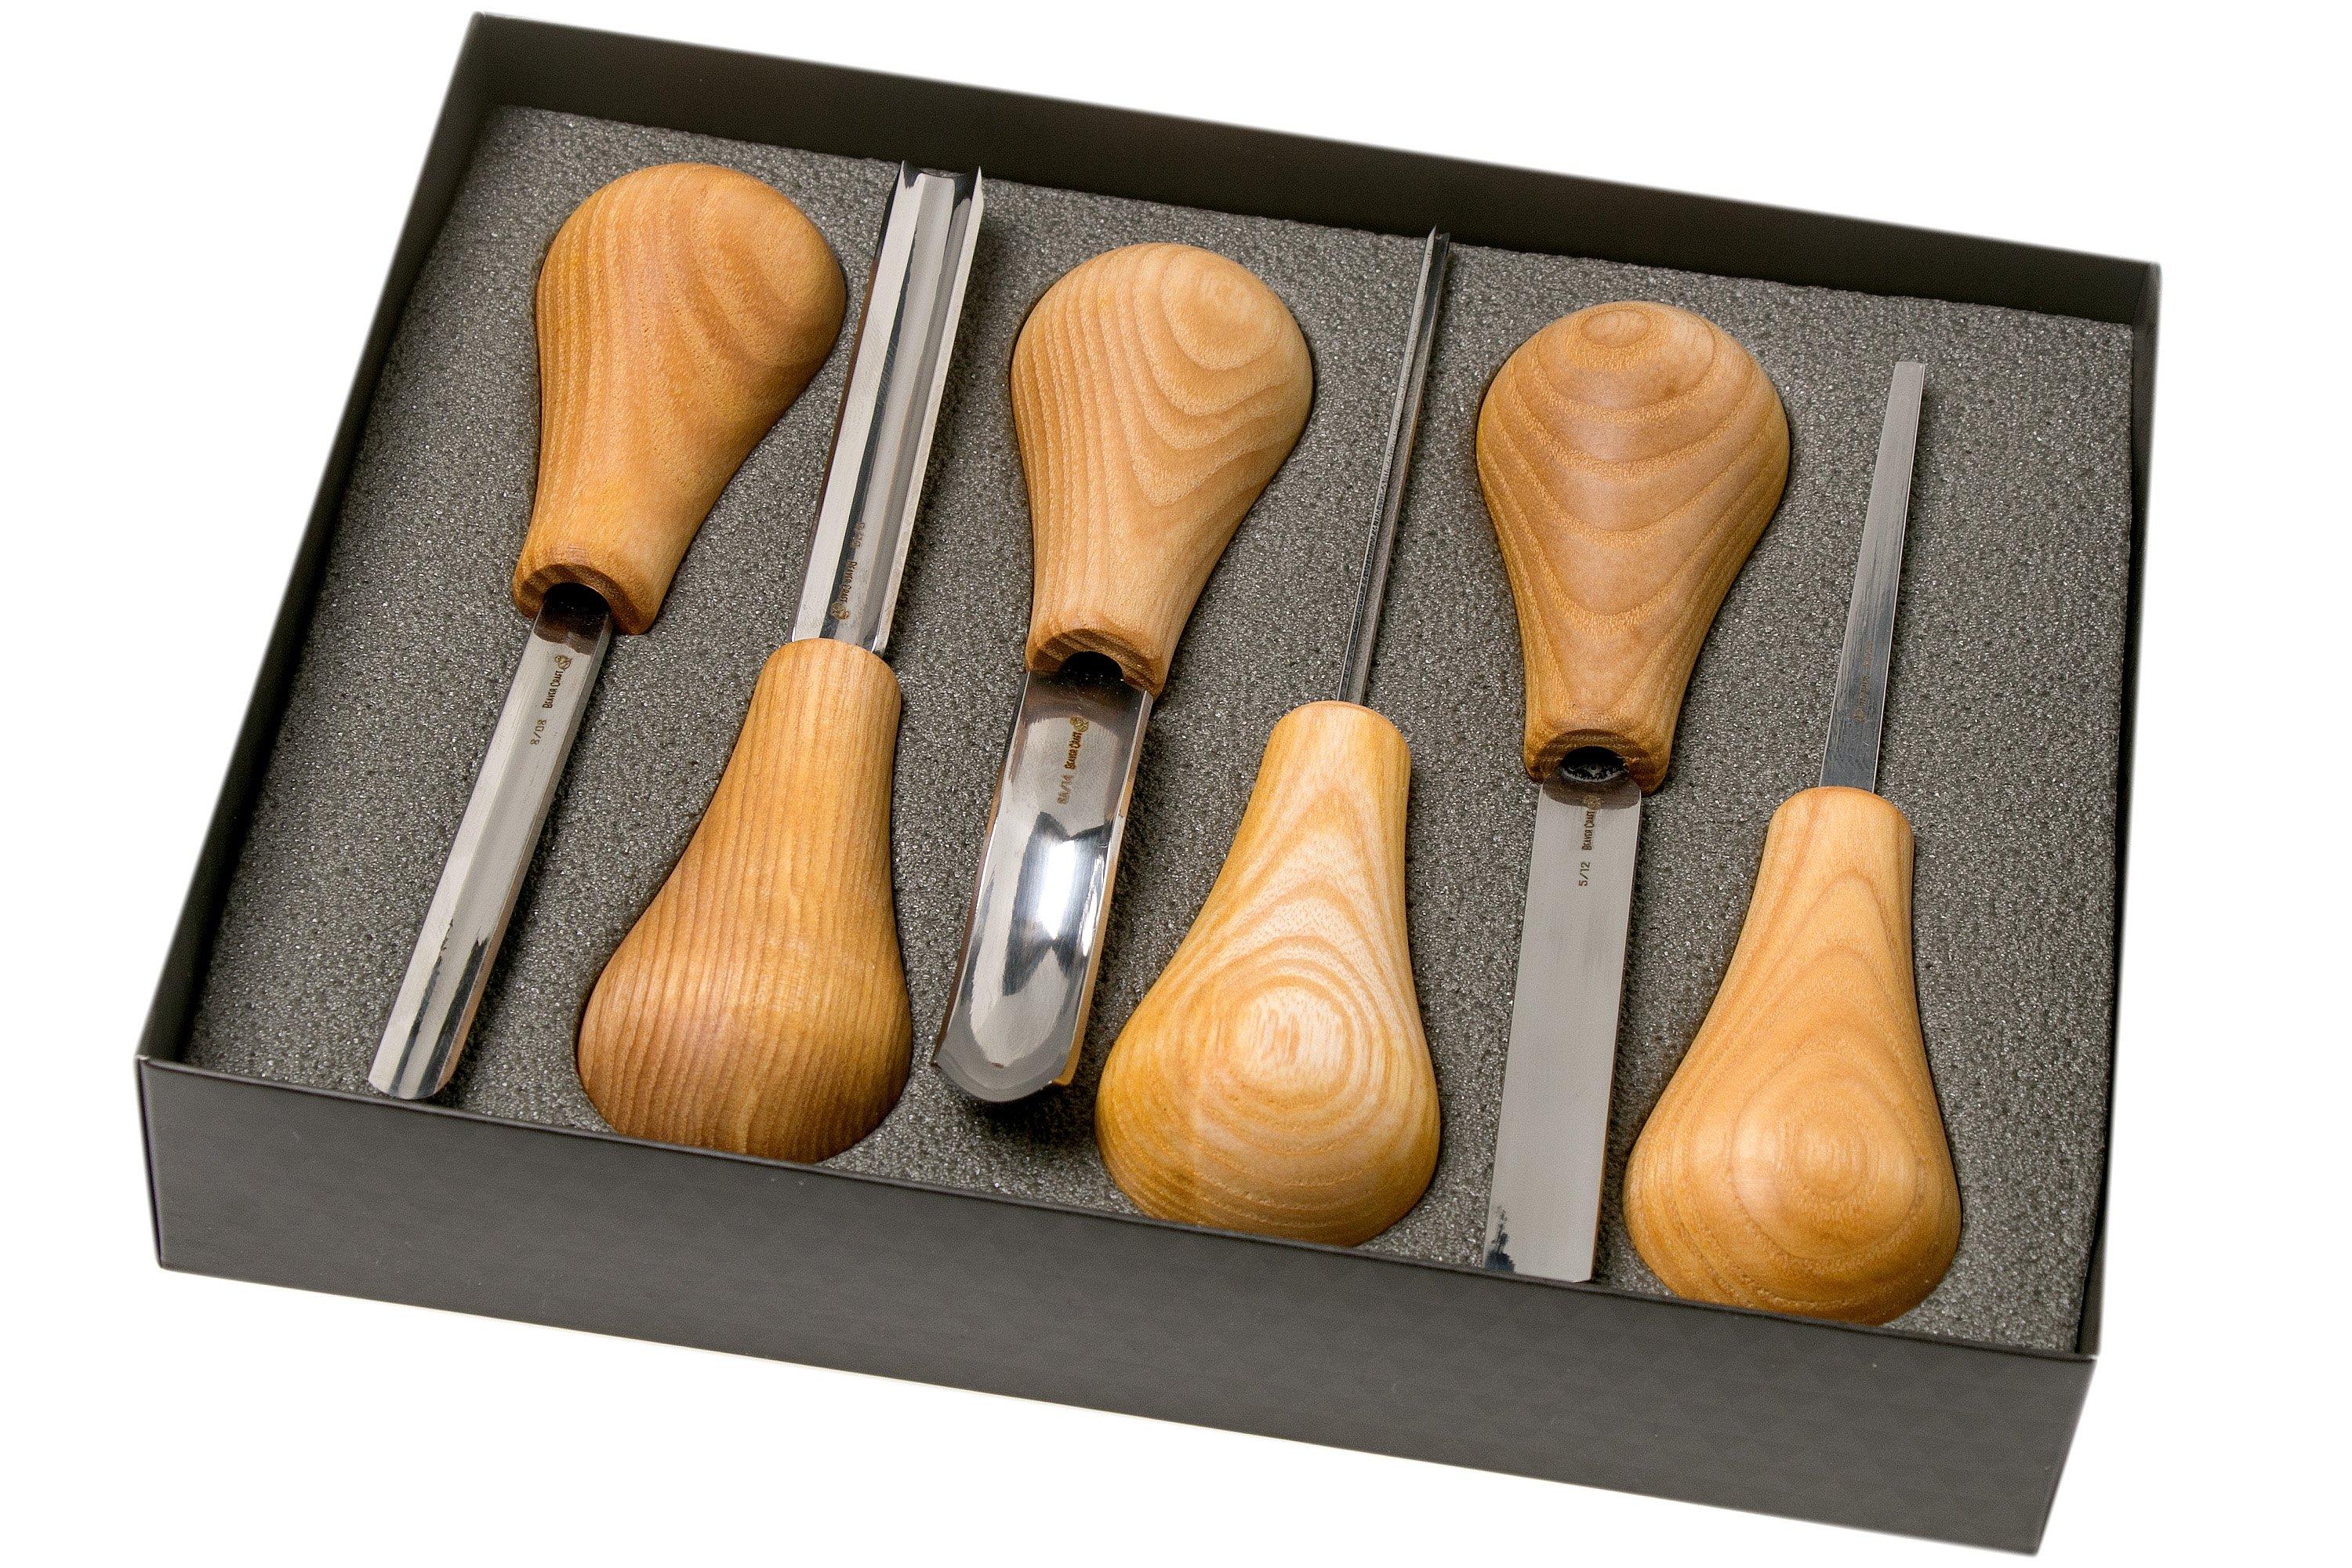 BeaverCraft Wood Carving Tools SC05 Wood Carving Kit Wood Carving Set Wood  Carving Knife Woodcarving Tools Wood Carving Palm Gouges Wood Chisels